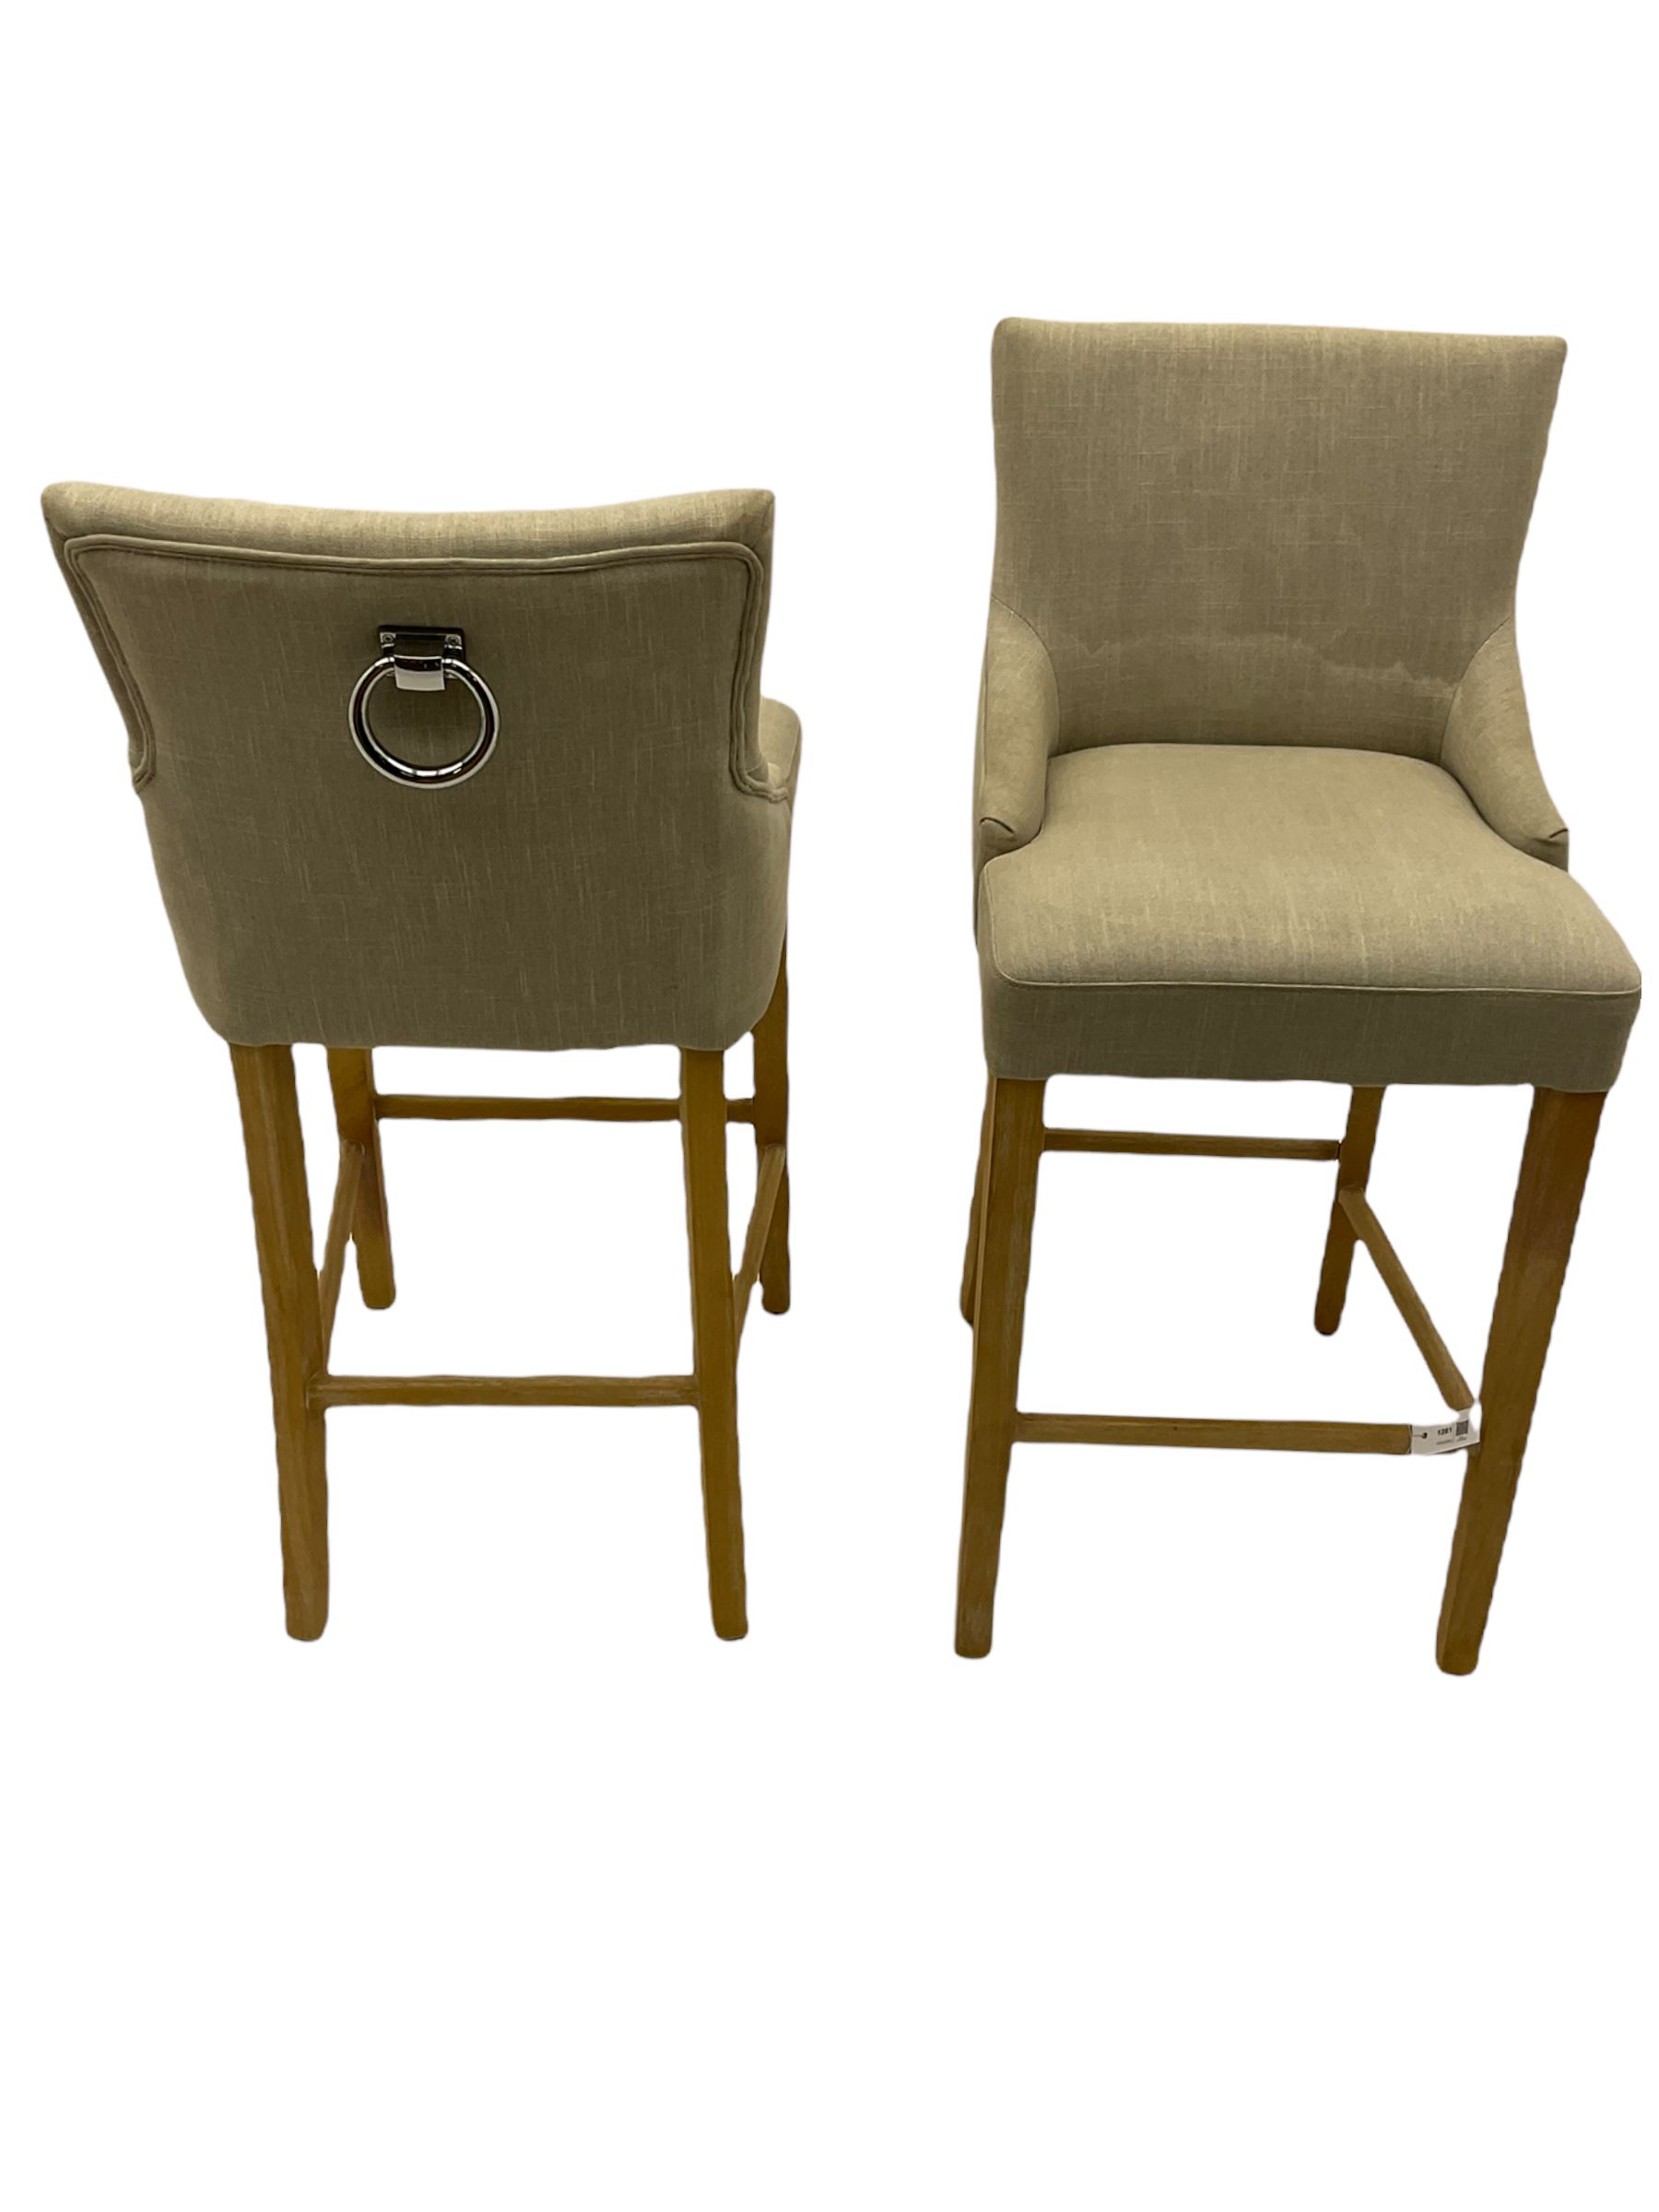 Pair of light oak bar stools - Image 6 of 12